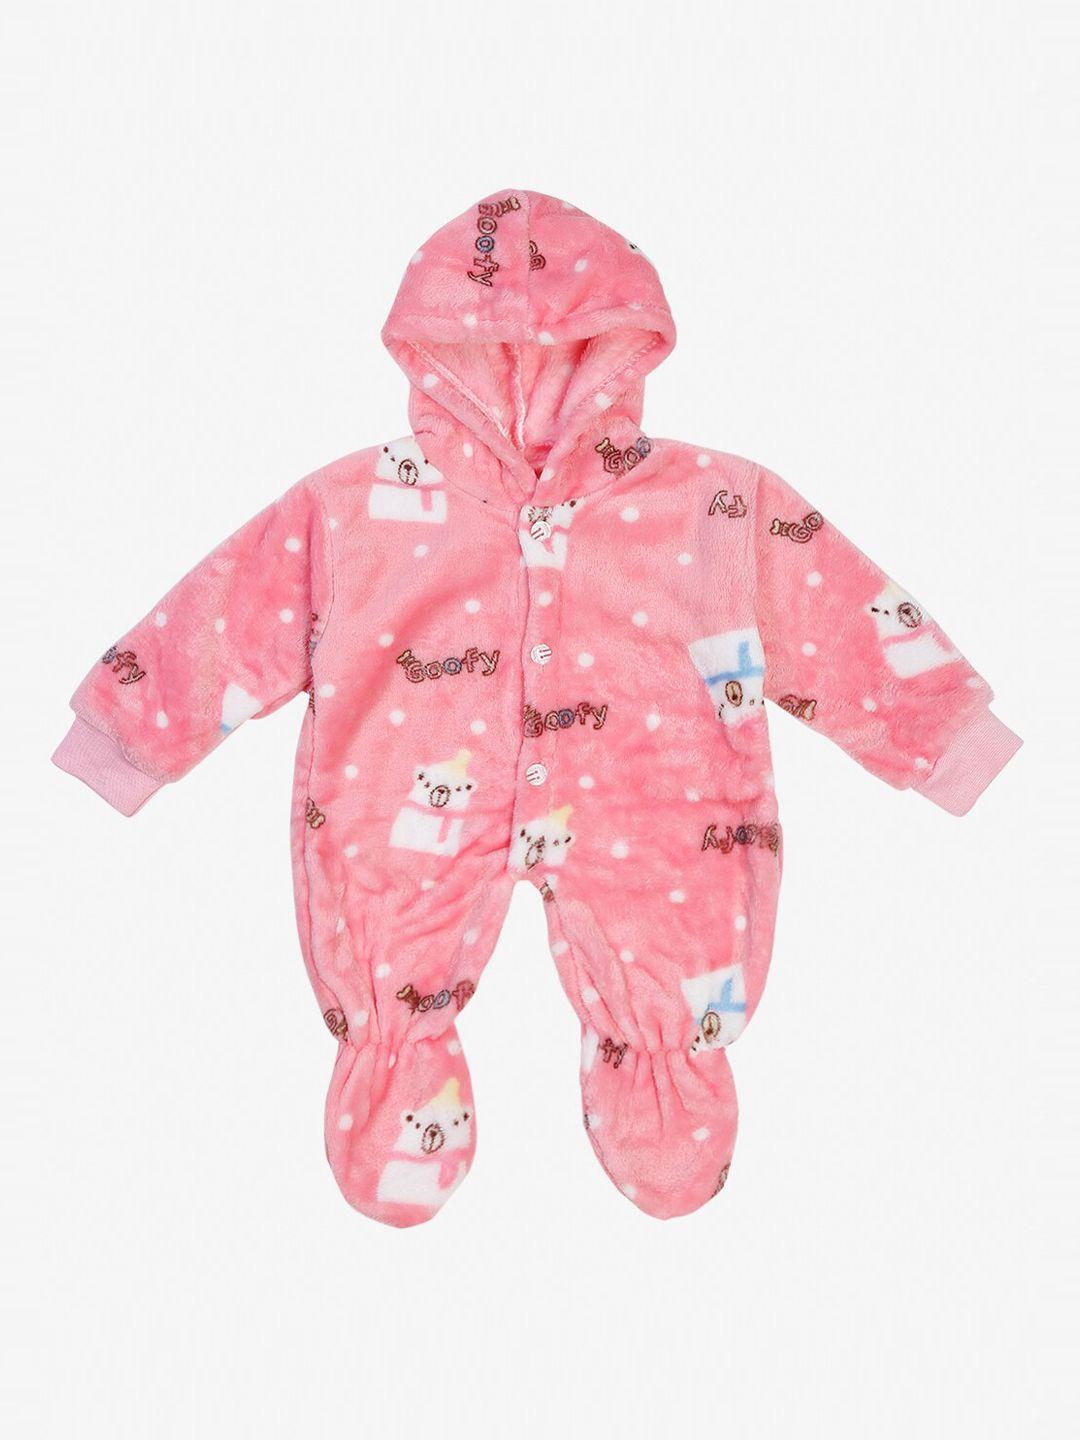 klotthe-kids-infants-pink-printed-woolen-romper